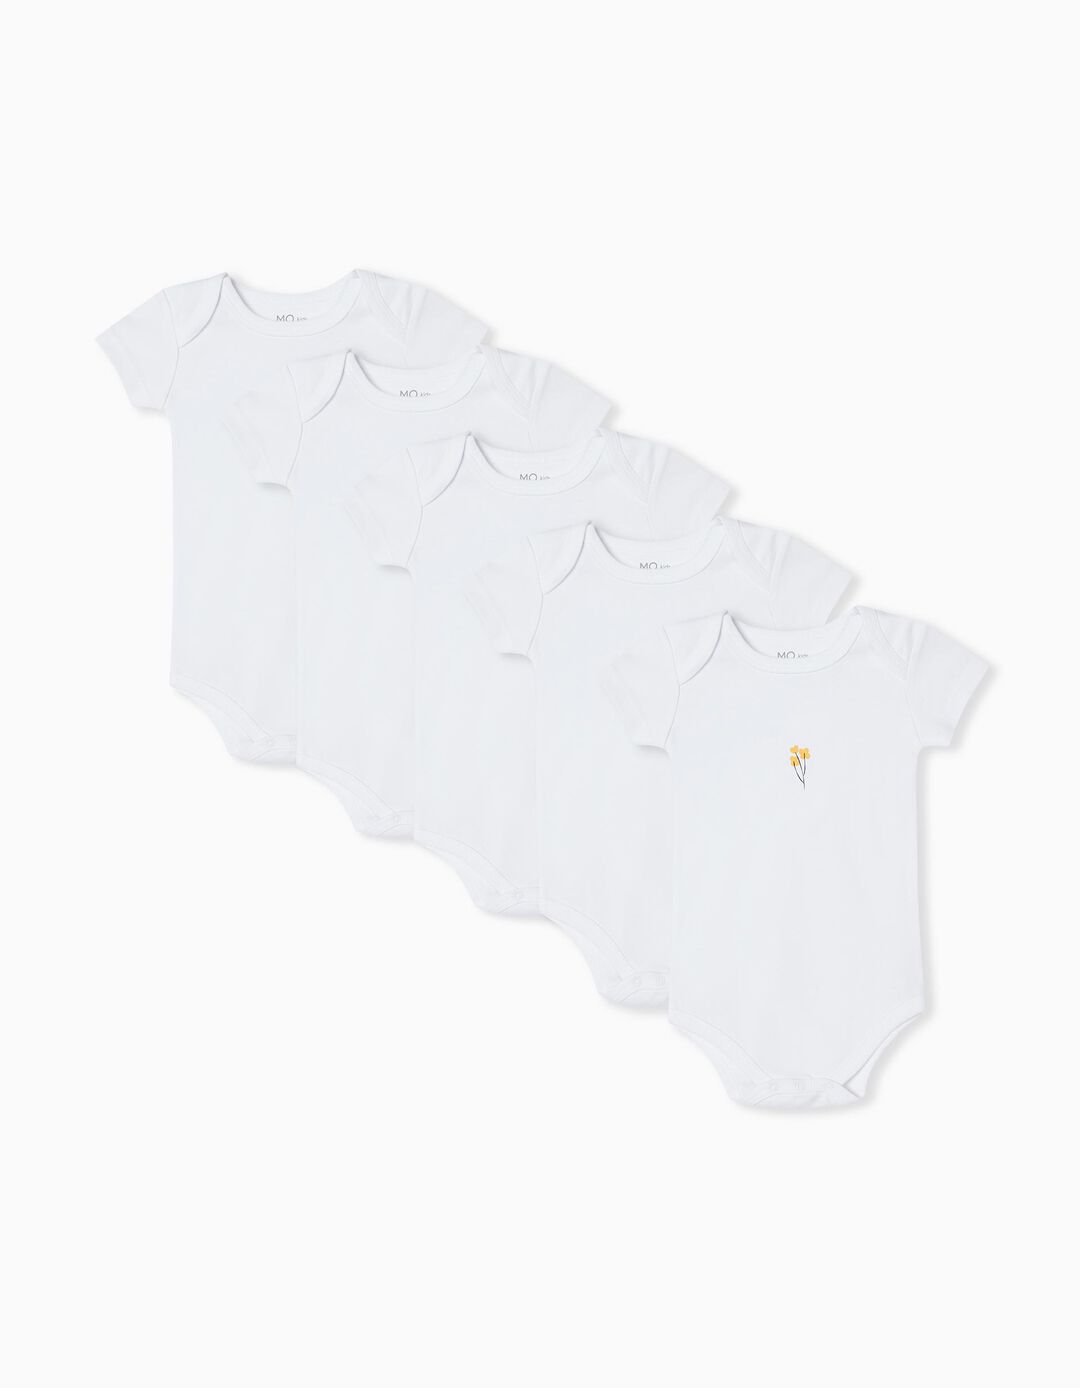 5 Short Sleeve Bodysuits Pack, Baby Girls, White